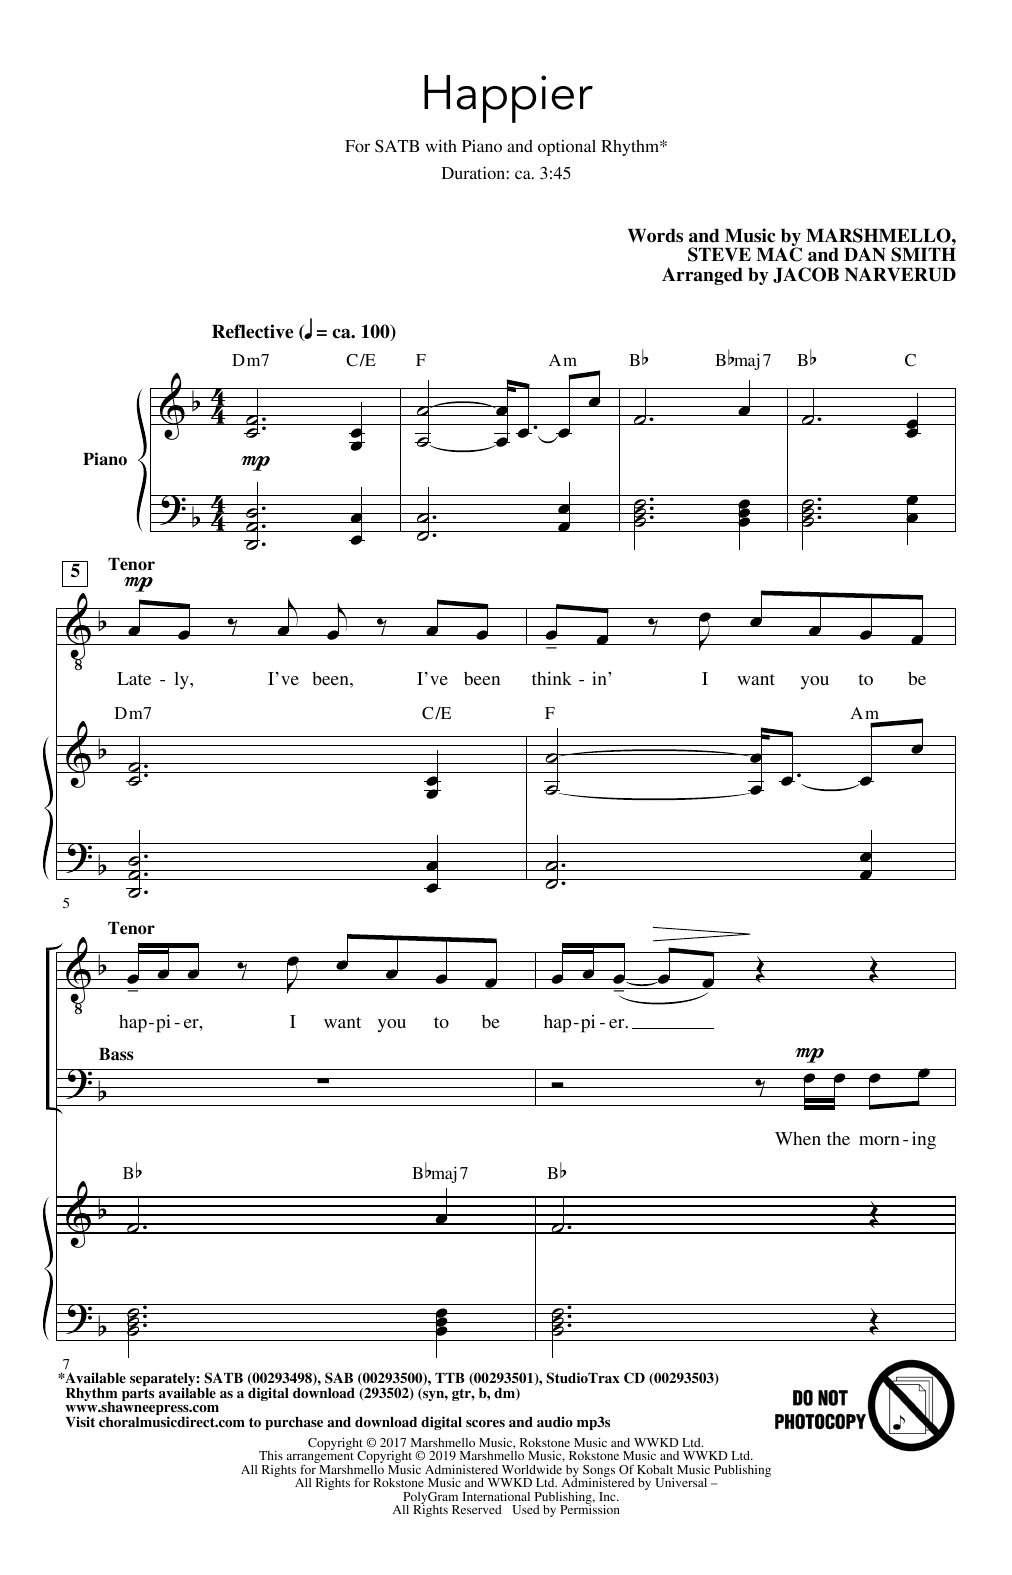 Marshmello & Bastille Happier (arr. Jacob Narverud) Sheet Music Notes & Chords for SAB Choir - Download or Print PDF